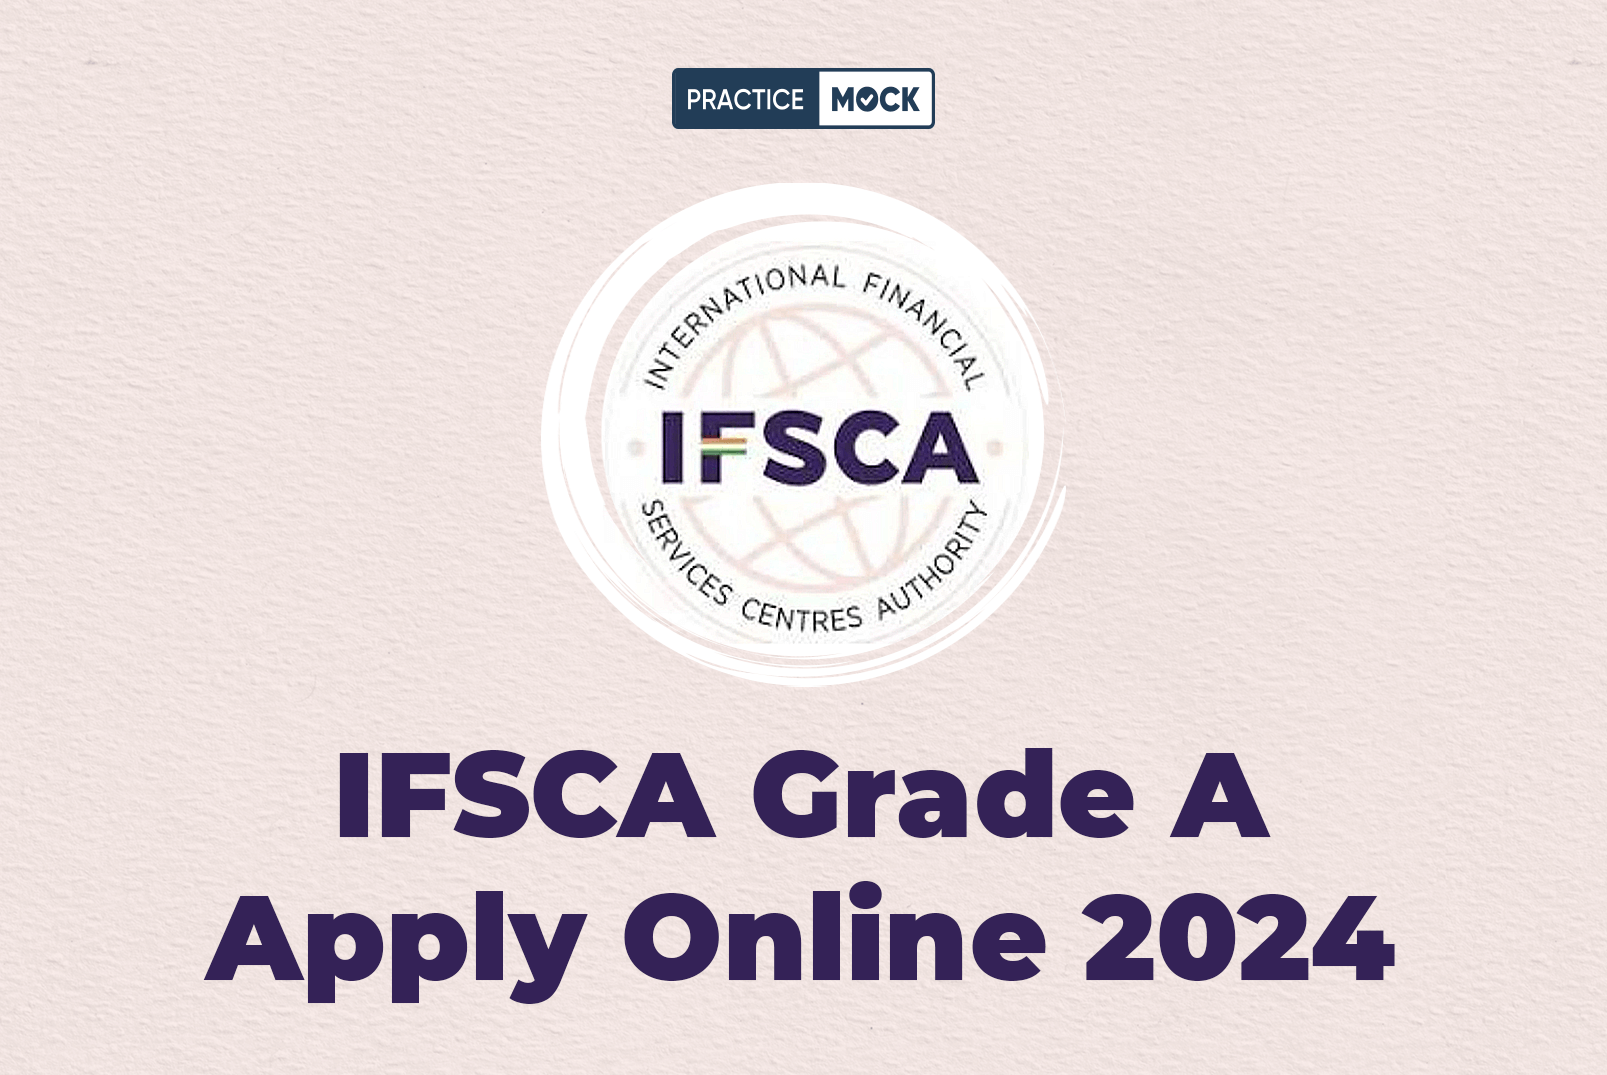 IFSCA Grade A Apply Online 2024